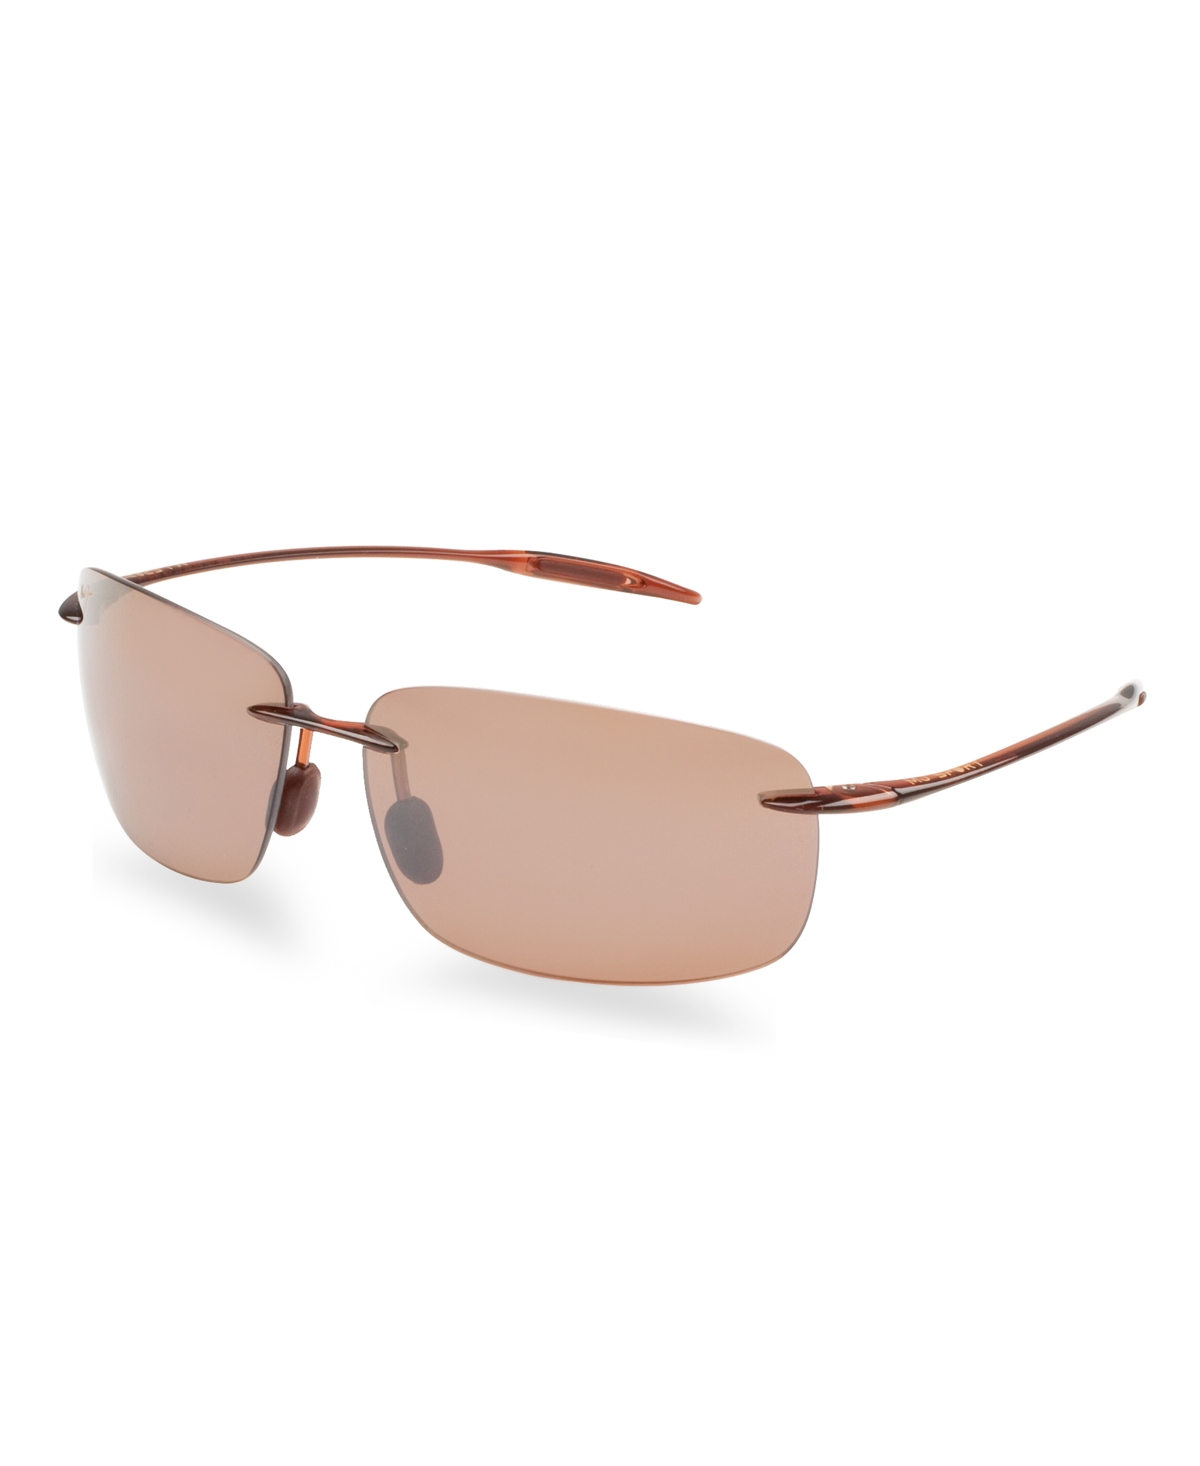 Maui Jim Polarized Breakwall Sunglasses, 422 In Brown,brown